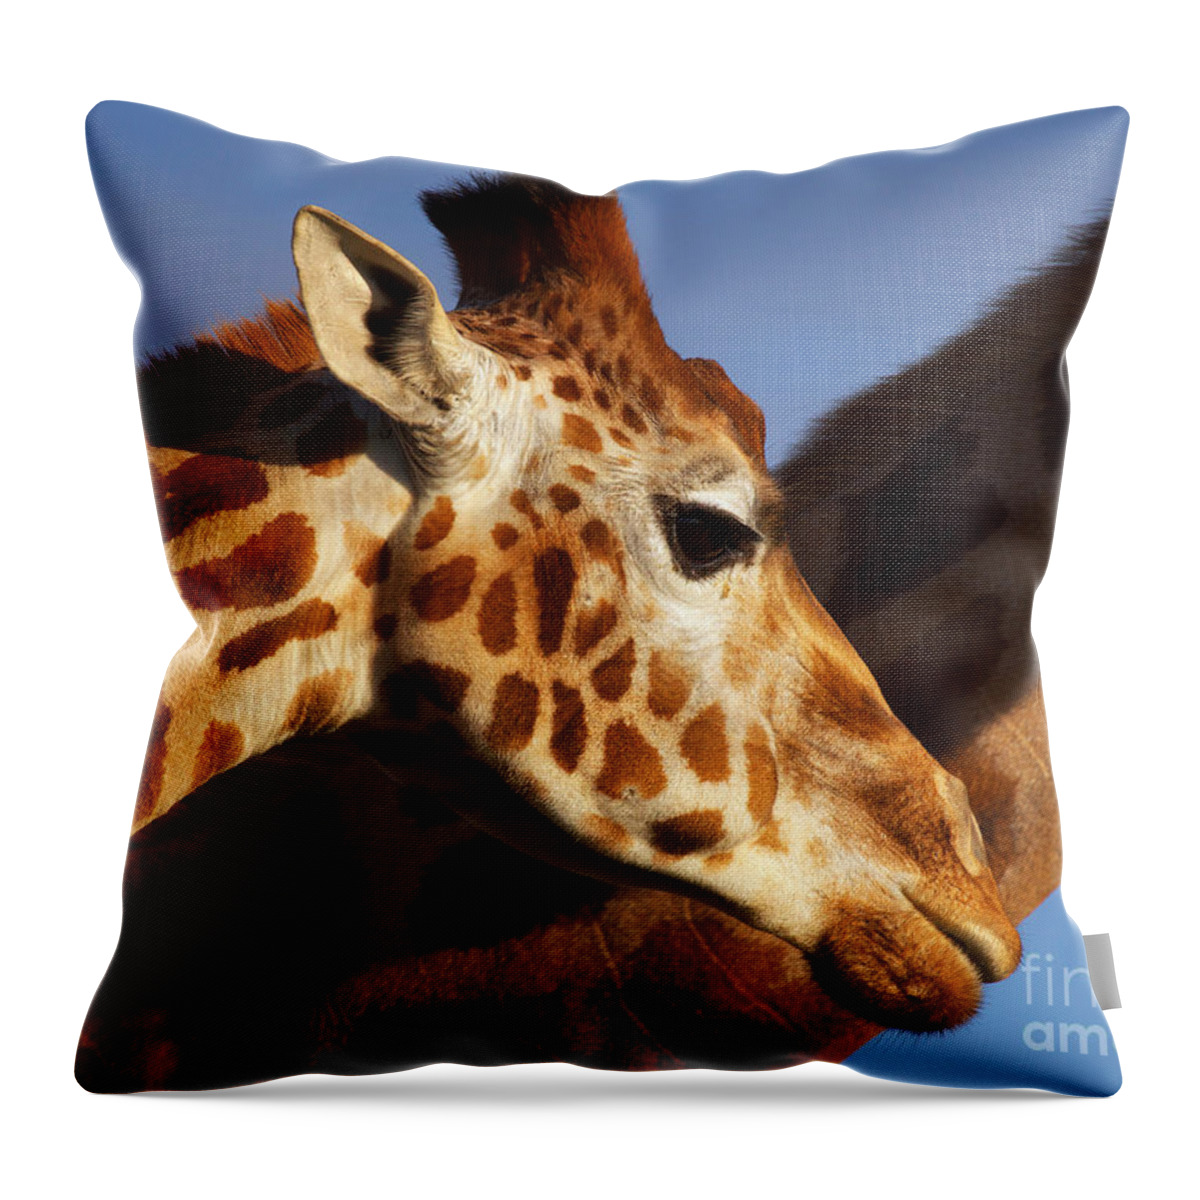 Rotschild Throw Pillow featuring the photograph Two Rothschild Giraffes by Nick Biemans